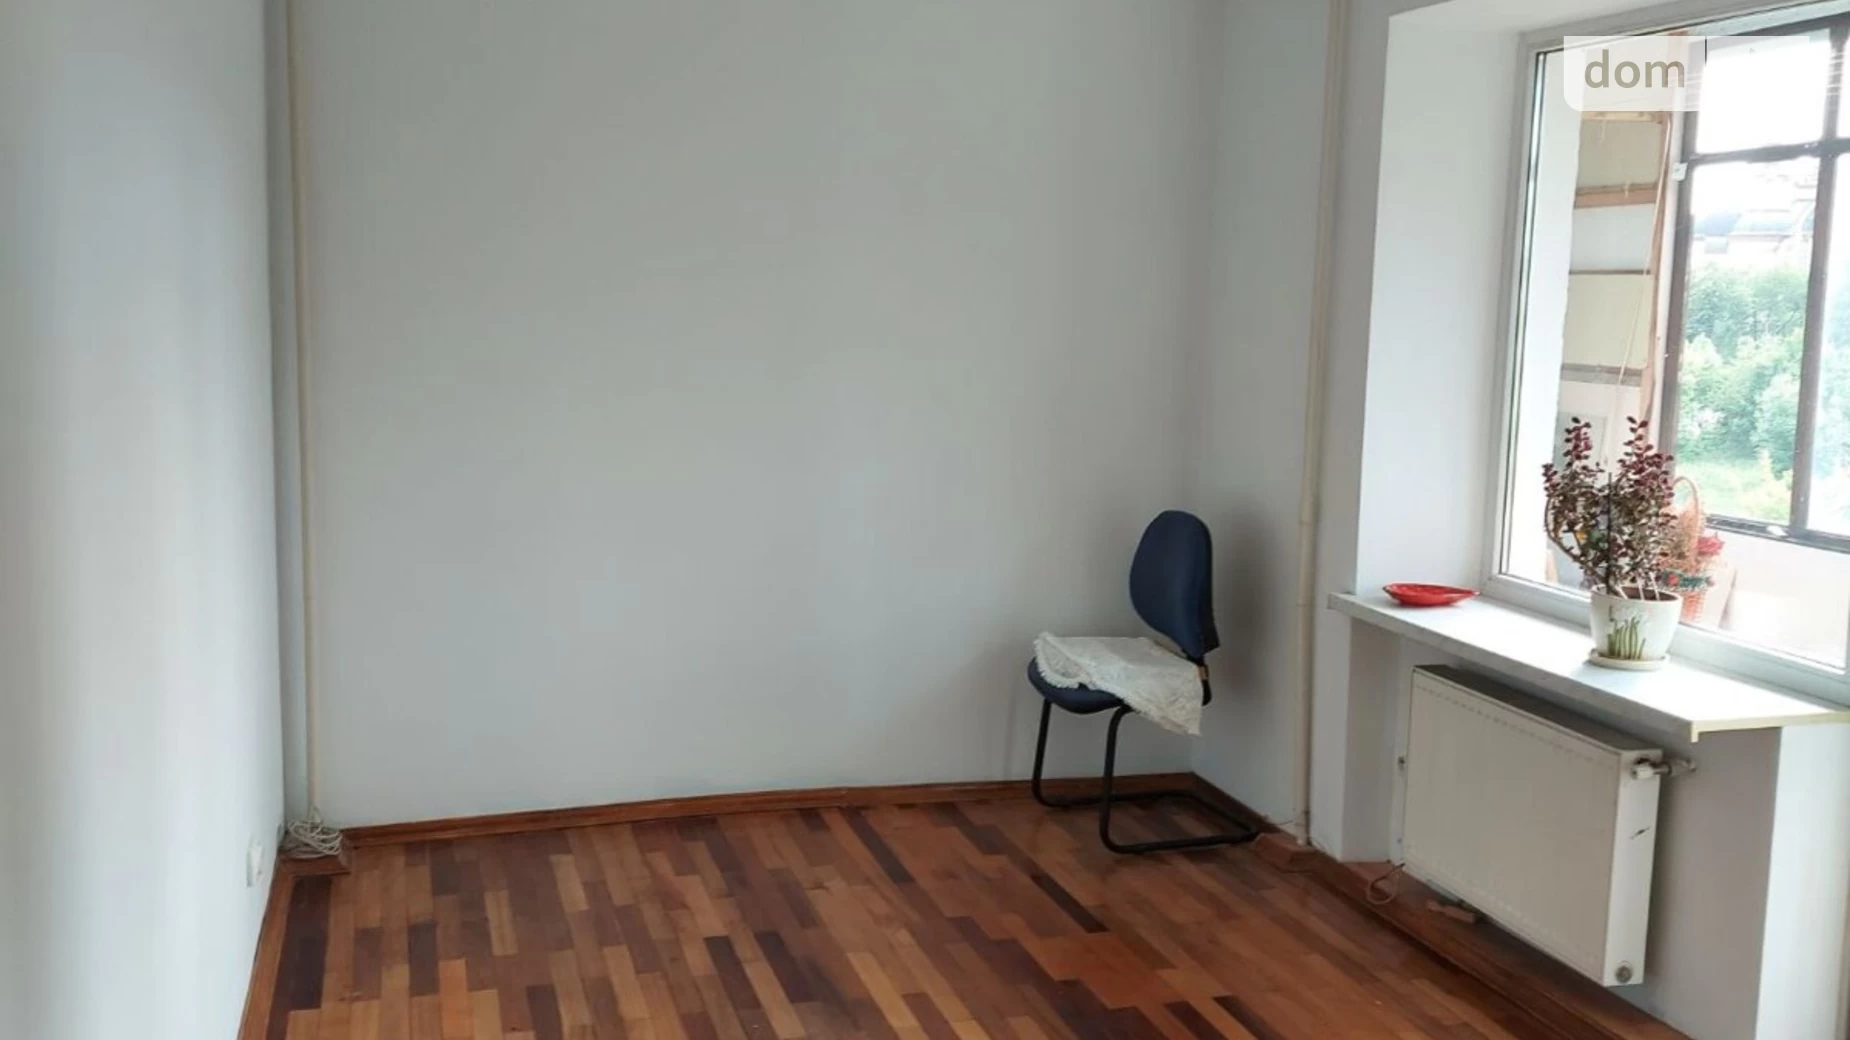 Продается 4-комнатная квартира 85.2 кв. м в Ивано-Франковске - фото 3